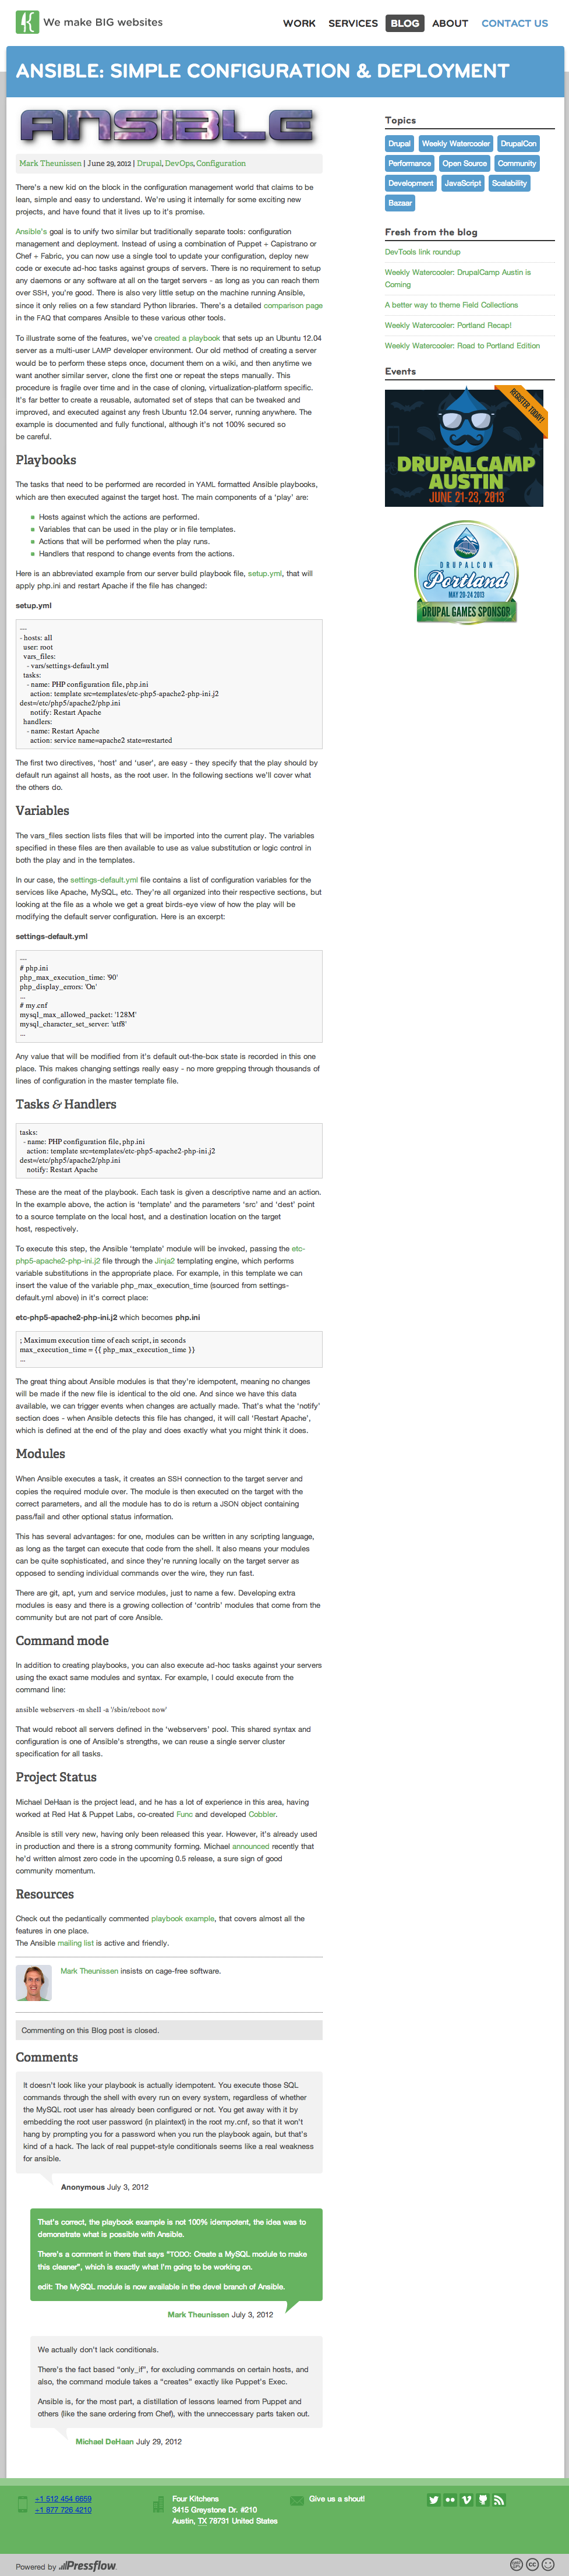 Screenshot of blog post Ansible configuration